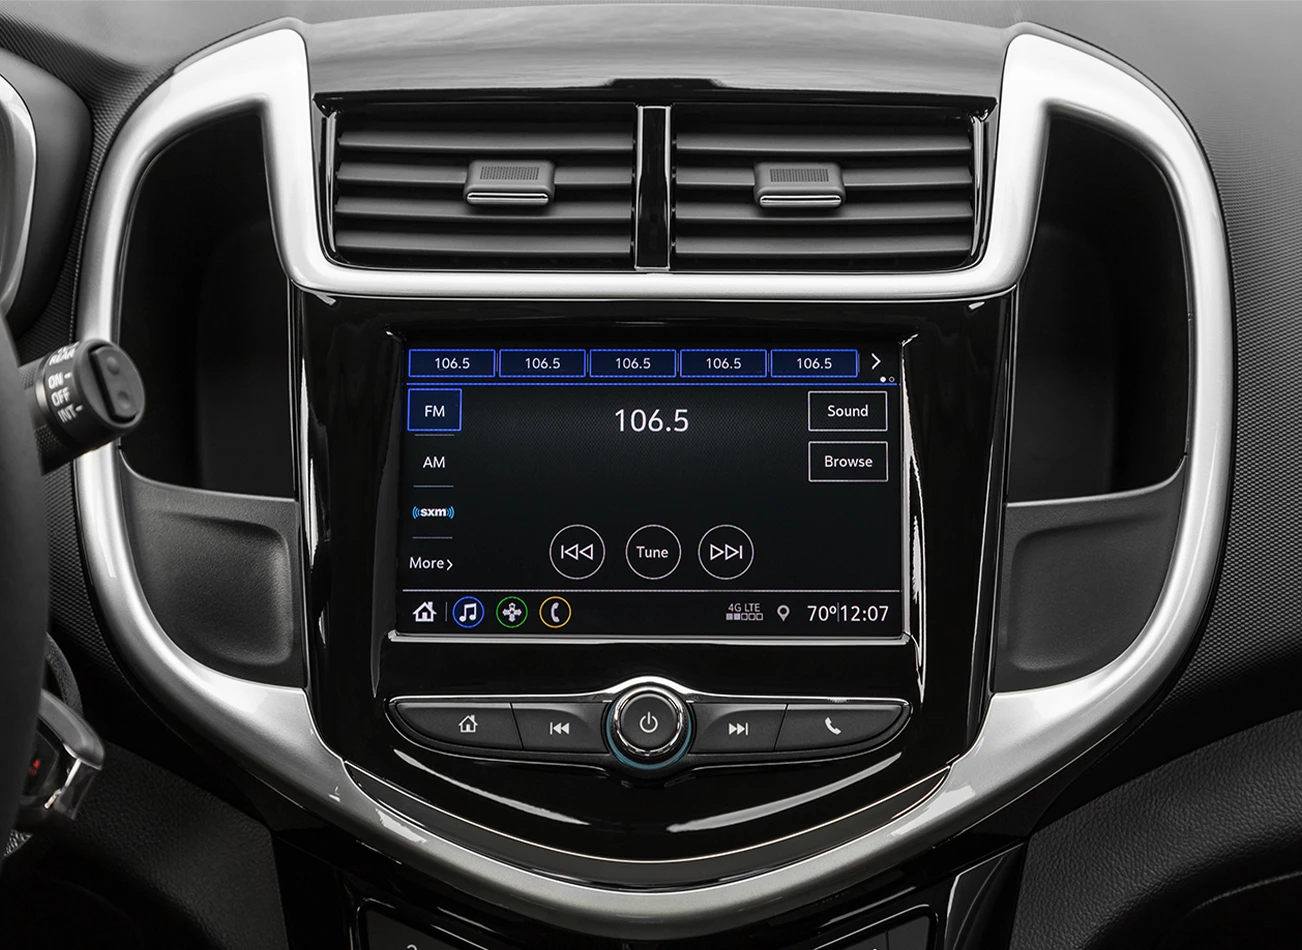 2020 Chevrolet Sonic: Entertainment screen display | CarMax